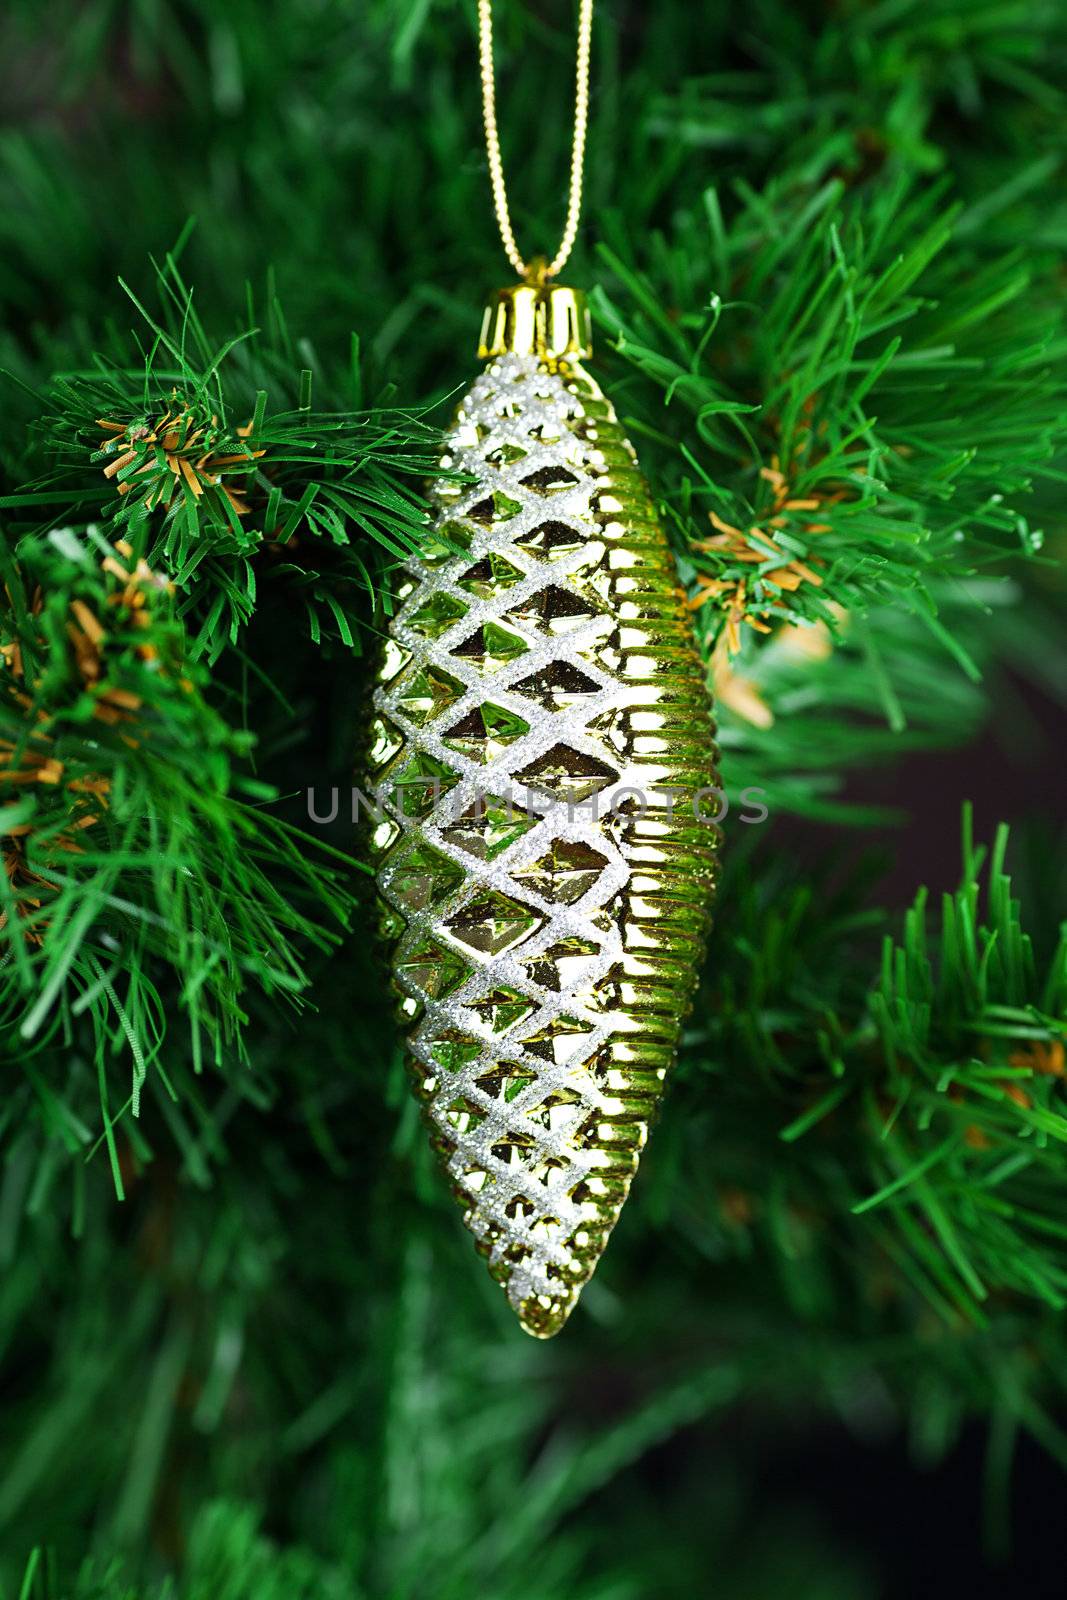 Christmas Toy on the Christmas tree